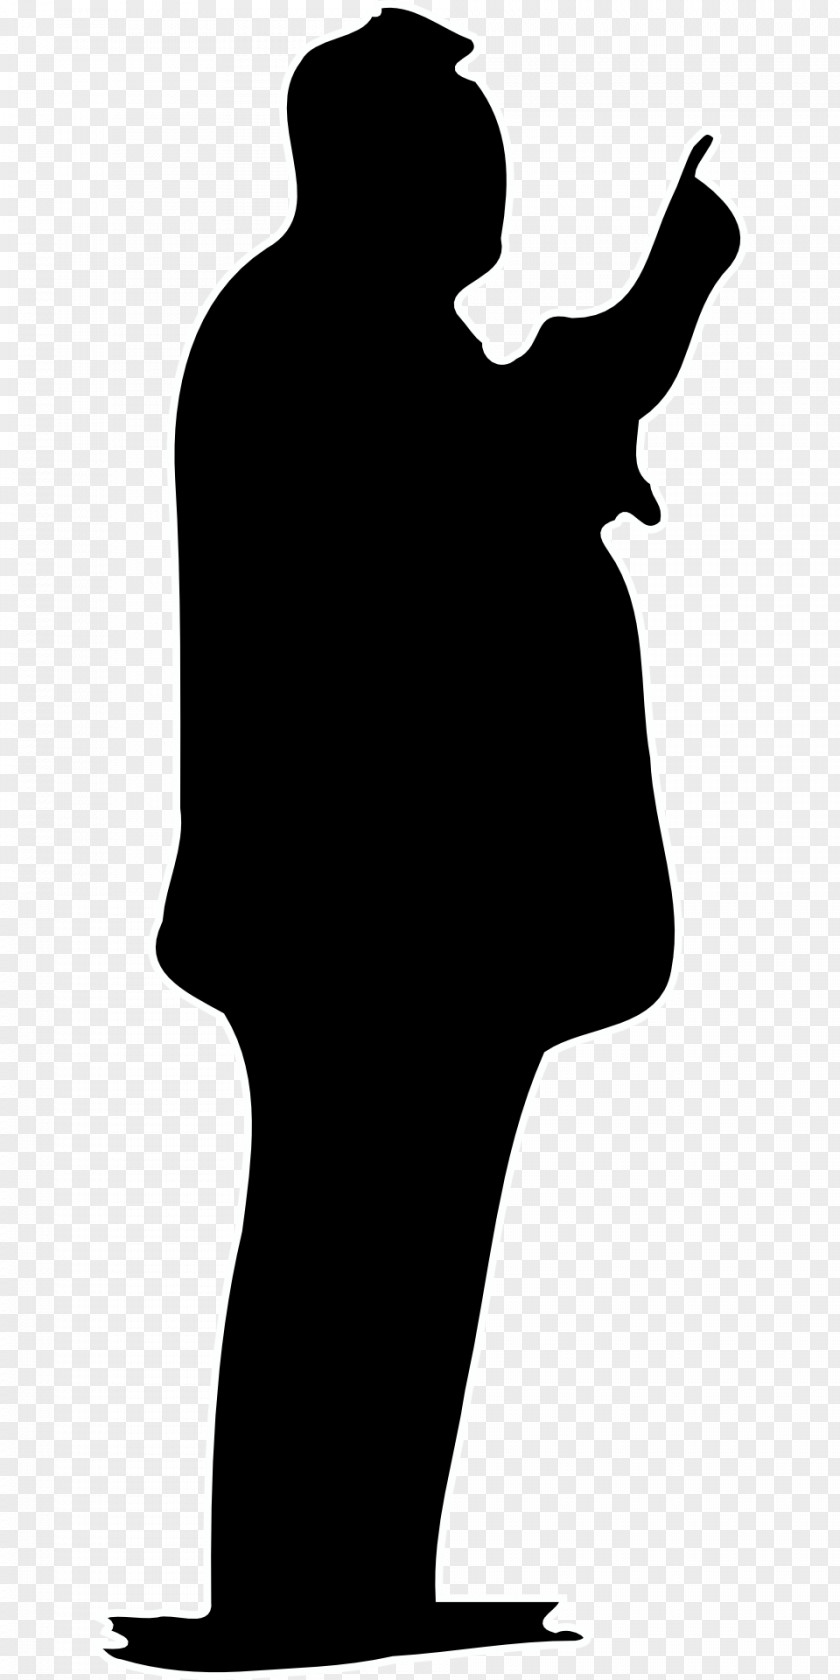 Person With Helmut James Bond Silhouette Clip Art PNG